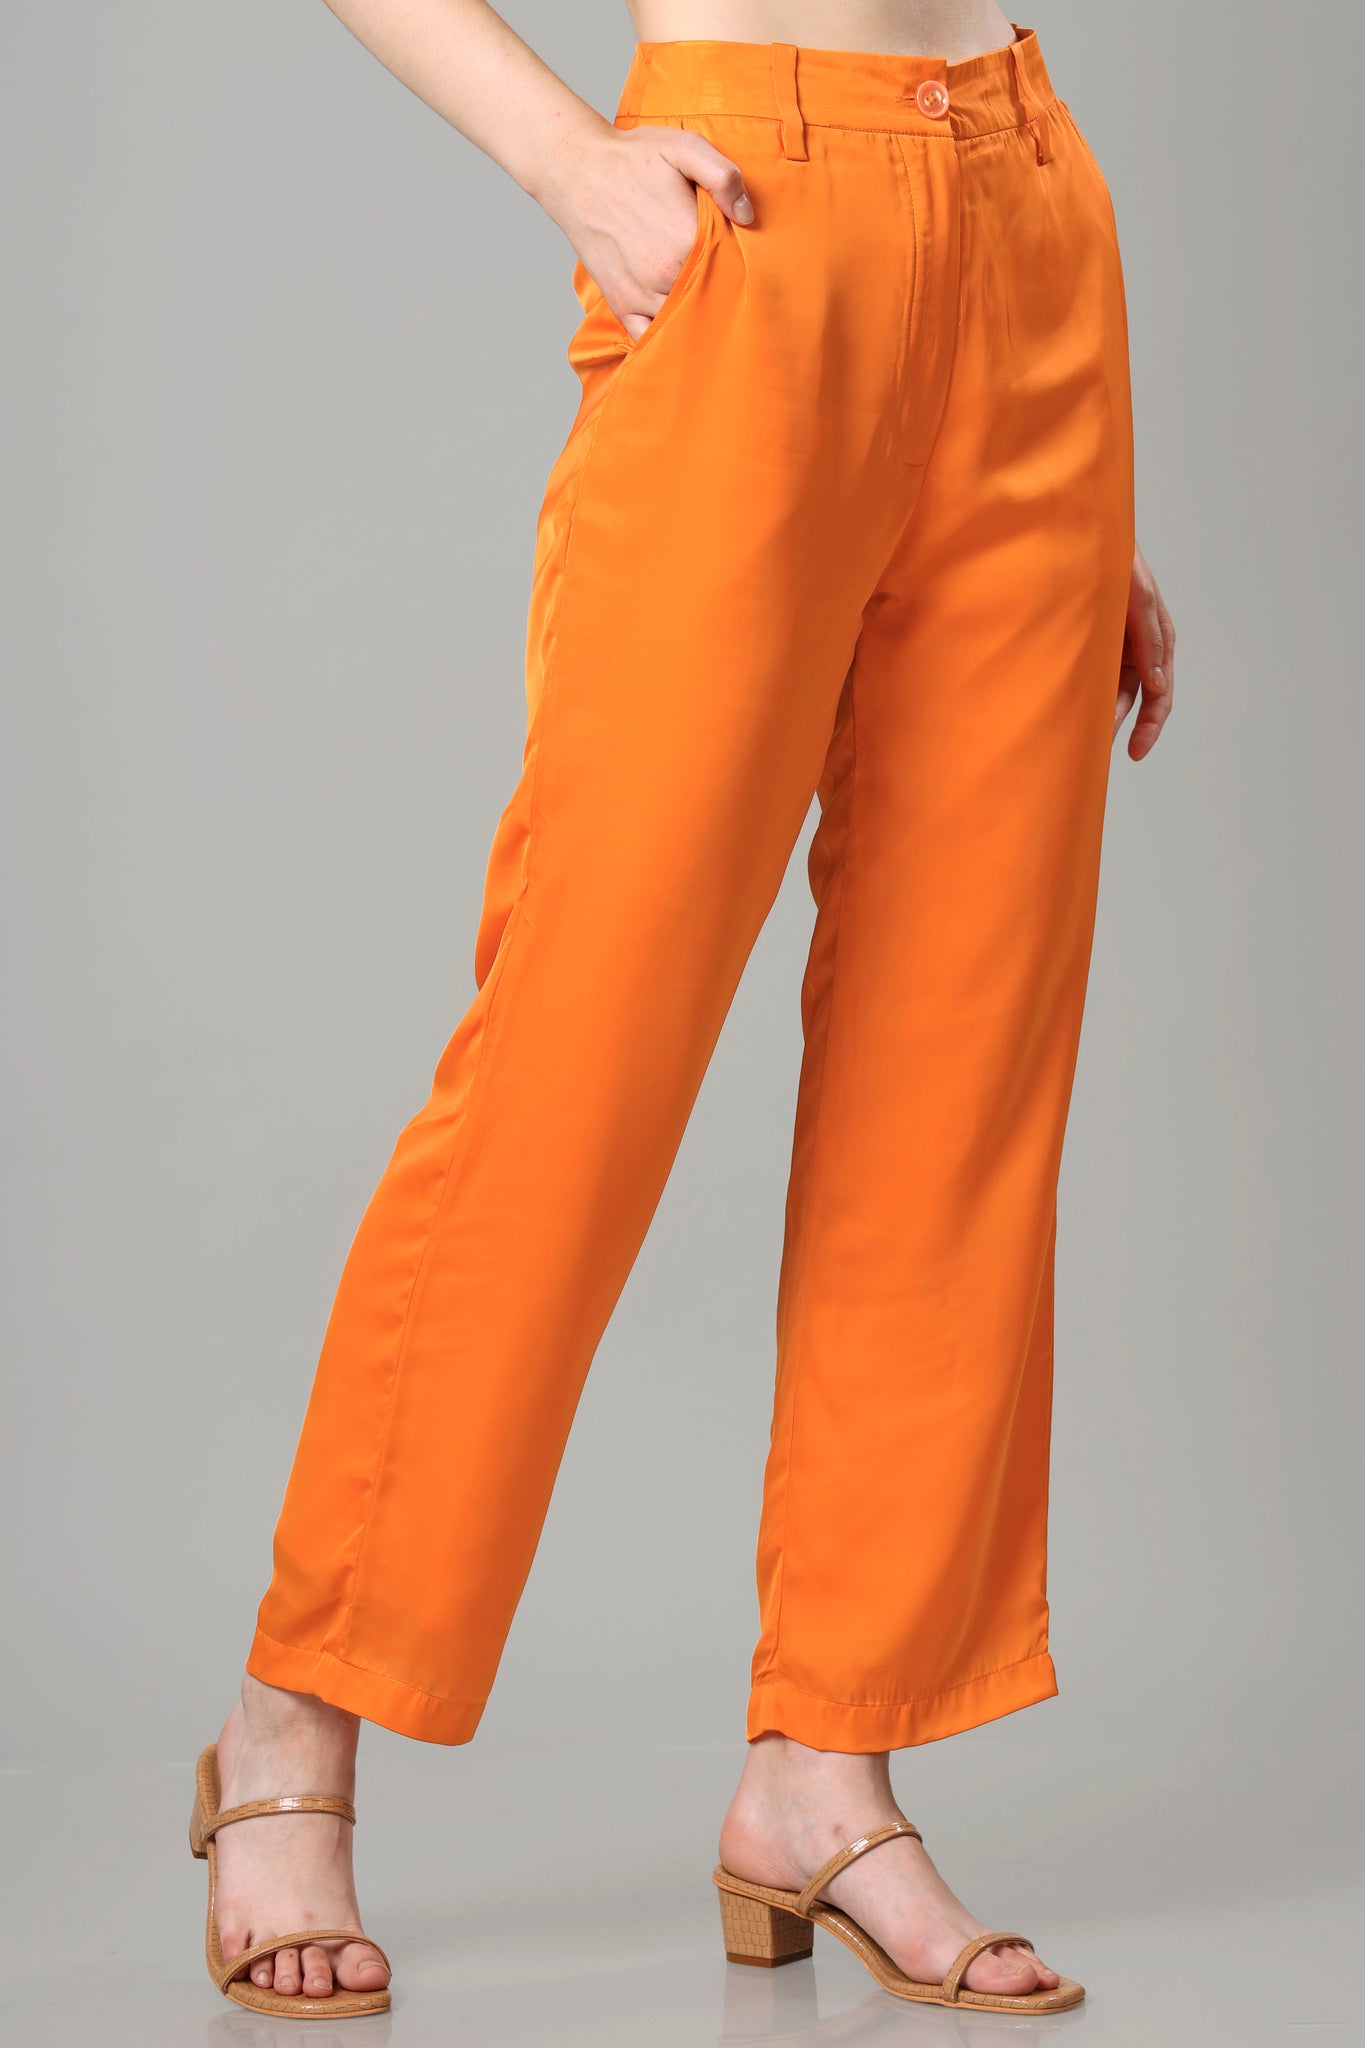 Sunset Orange Ladies Bottom Wear